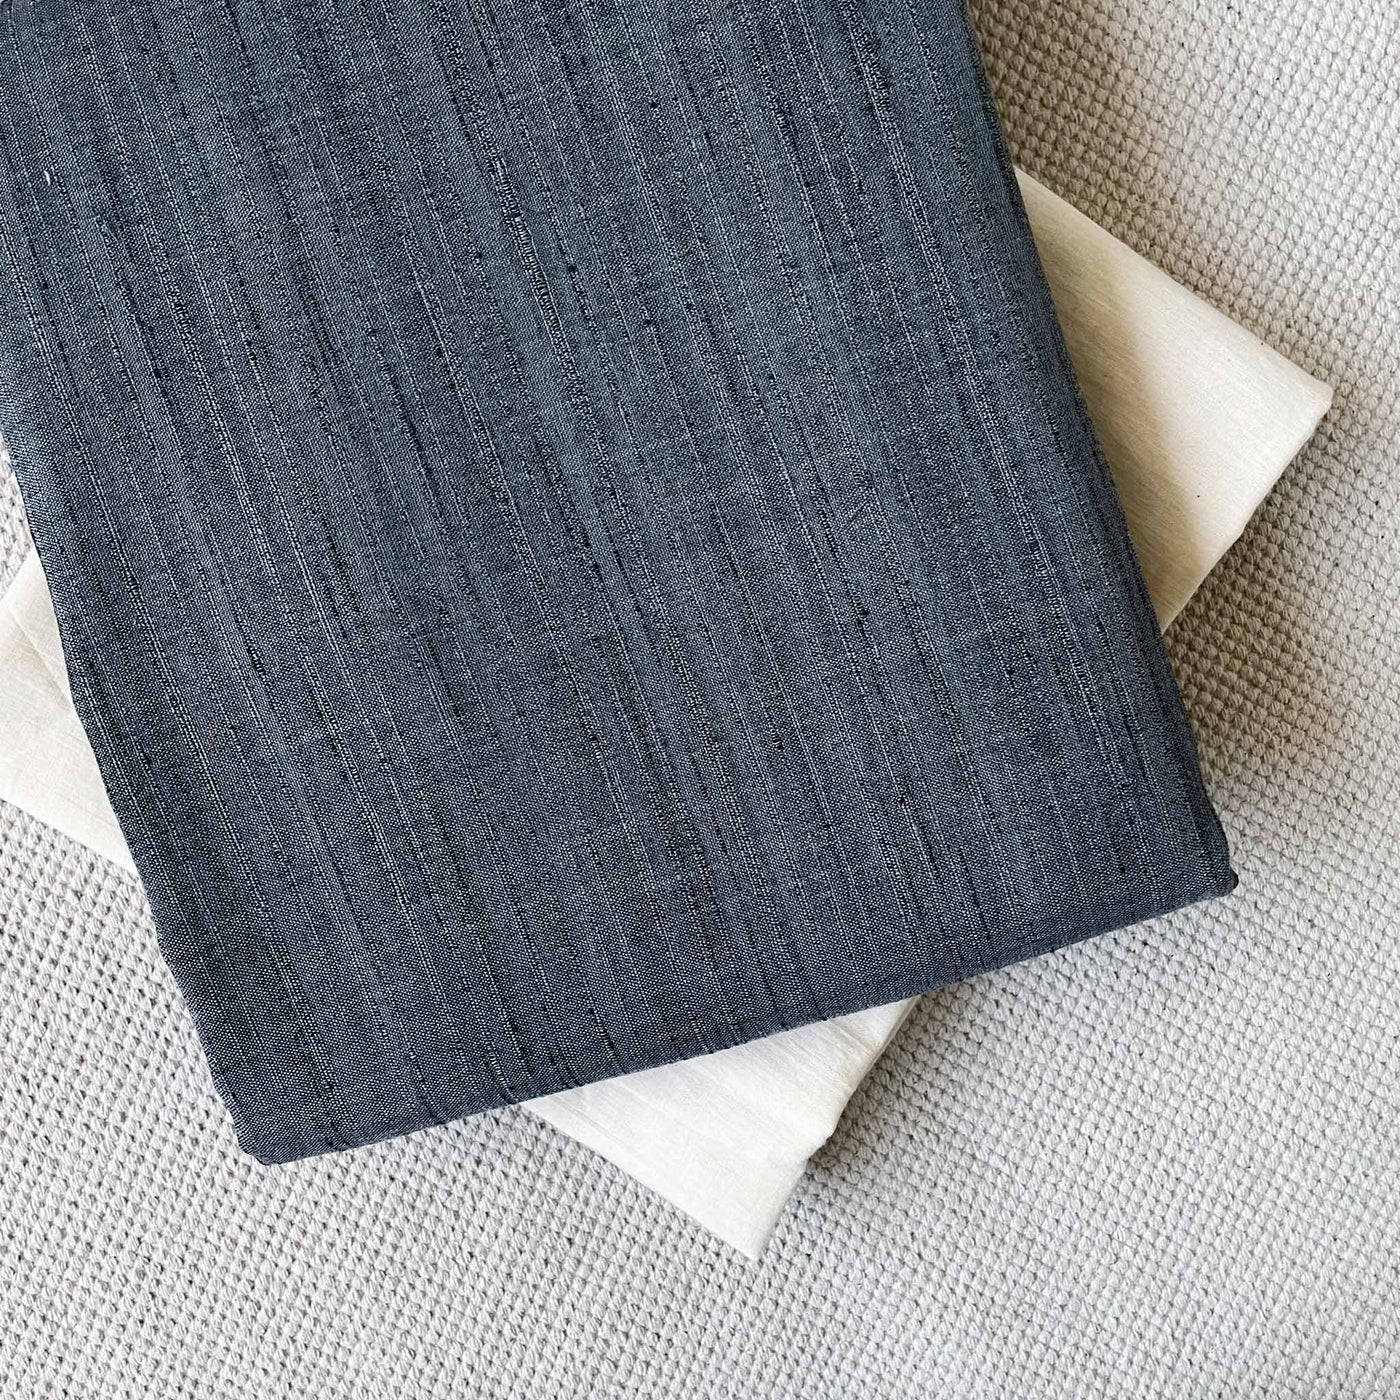 Fabric Pandit Kurta Set Unisex Dark Grey Color Bhagalpuri Woven Cotton Slub Kurta Fabric (1.8 Meters) | and Cotton Pyjama (2.5 Meters) | Unstitched Combo Set